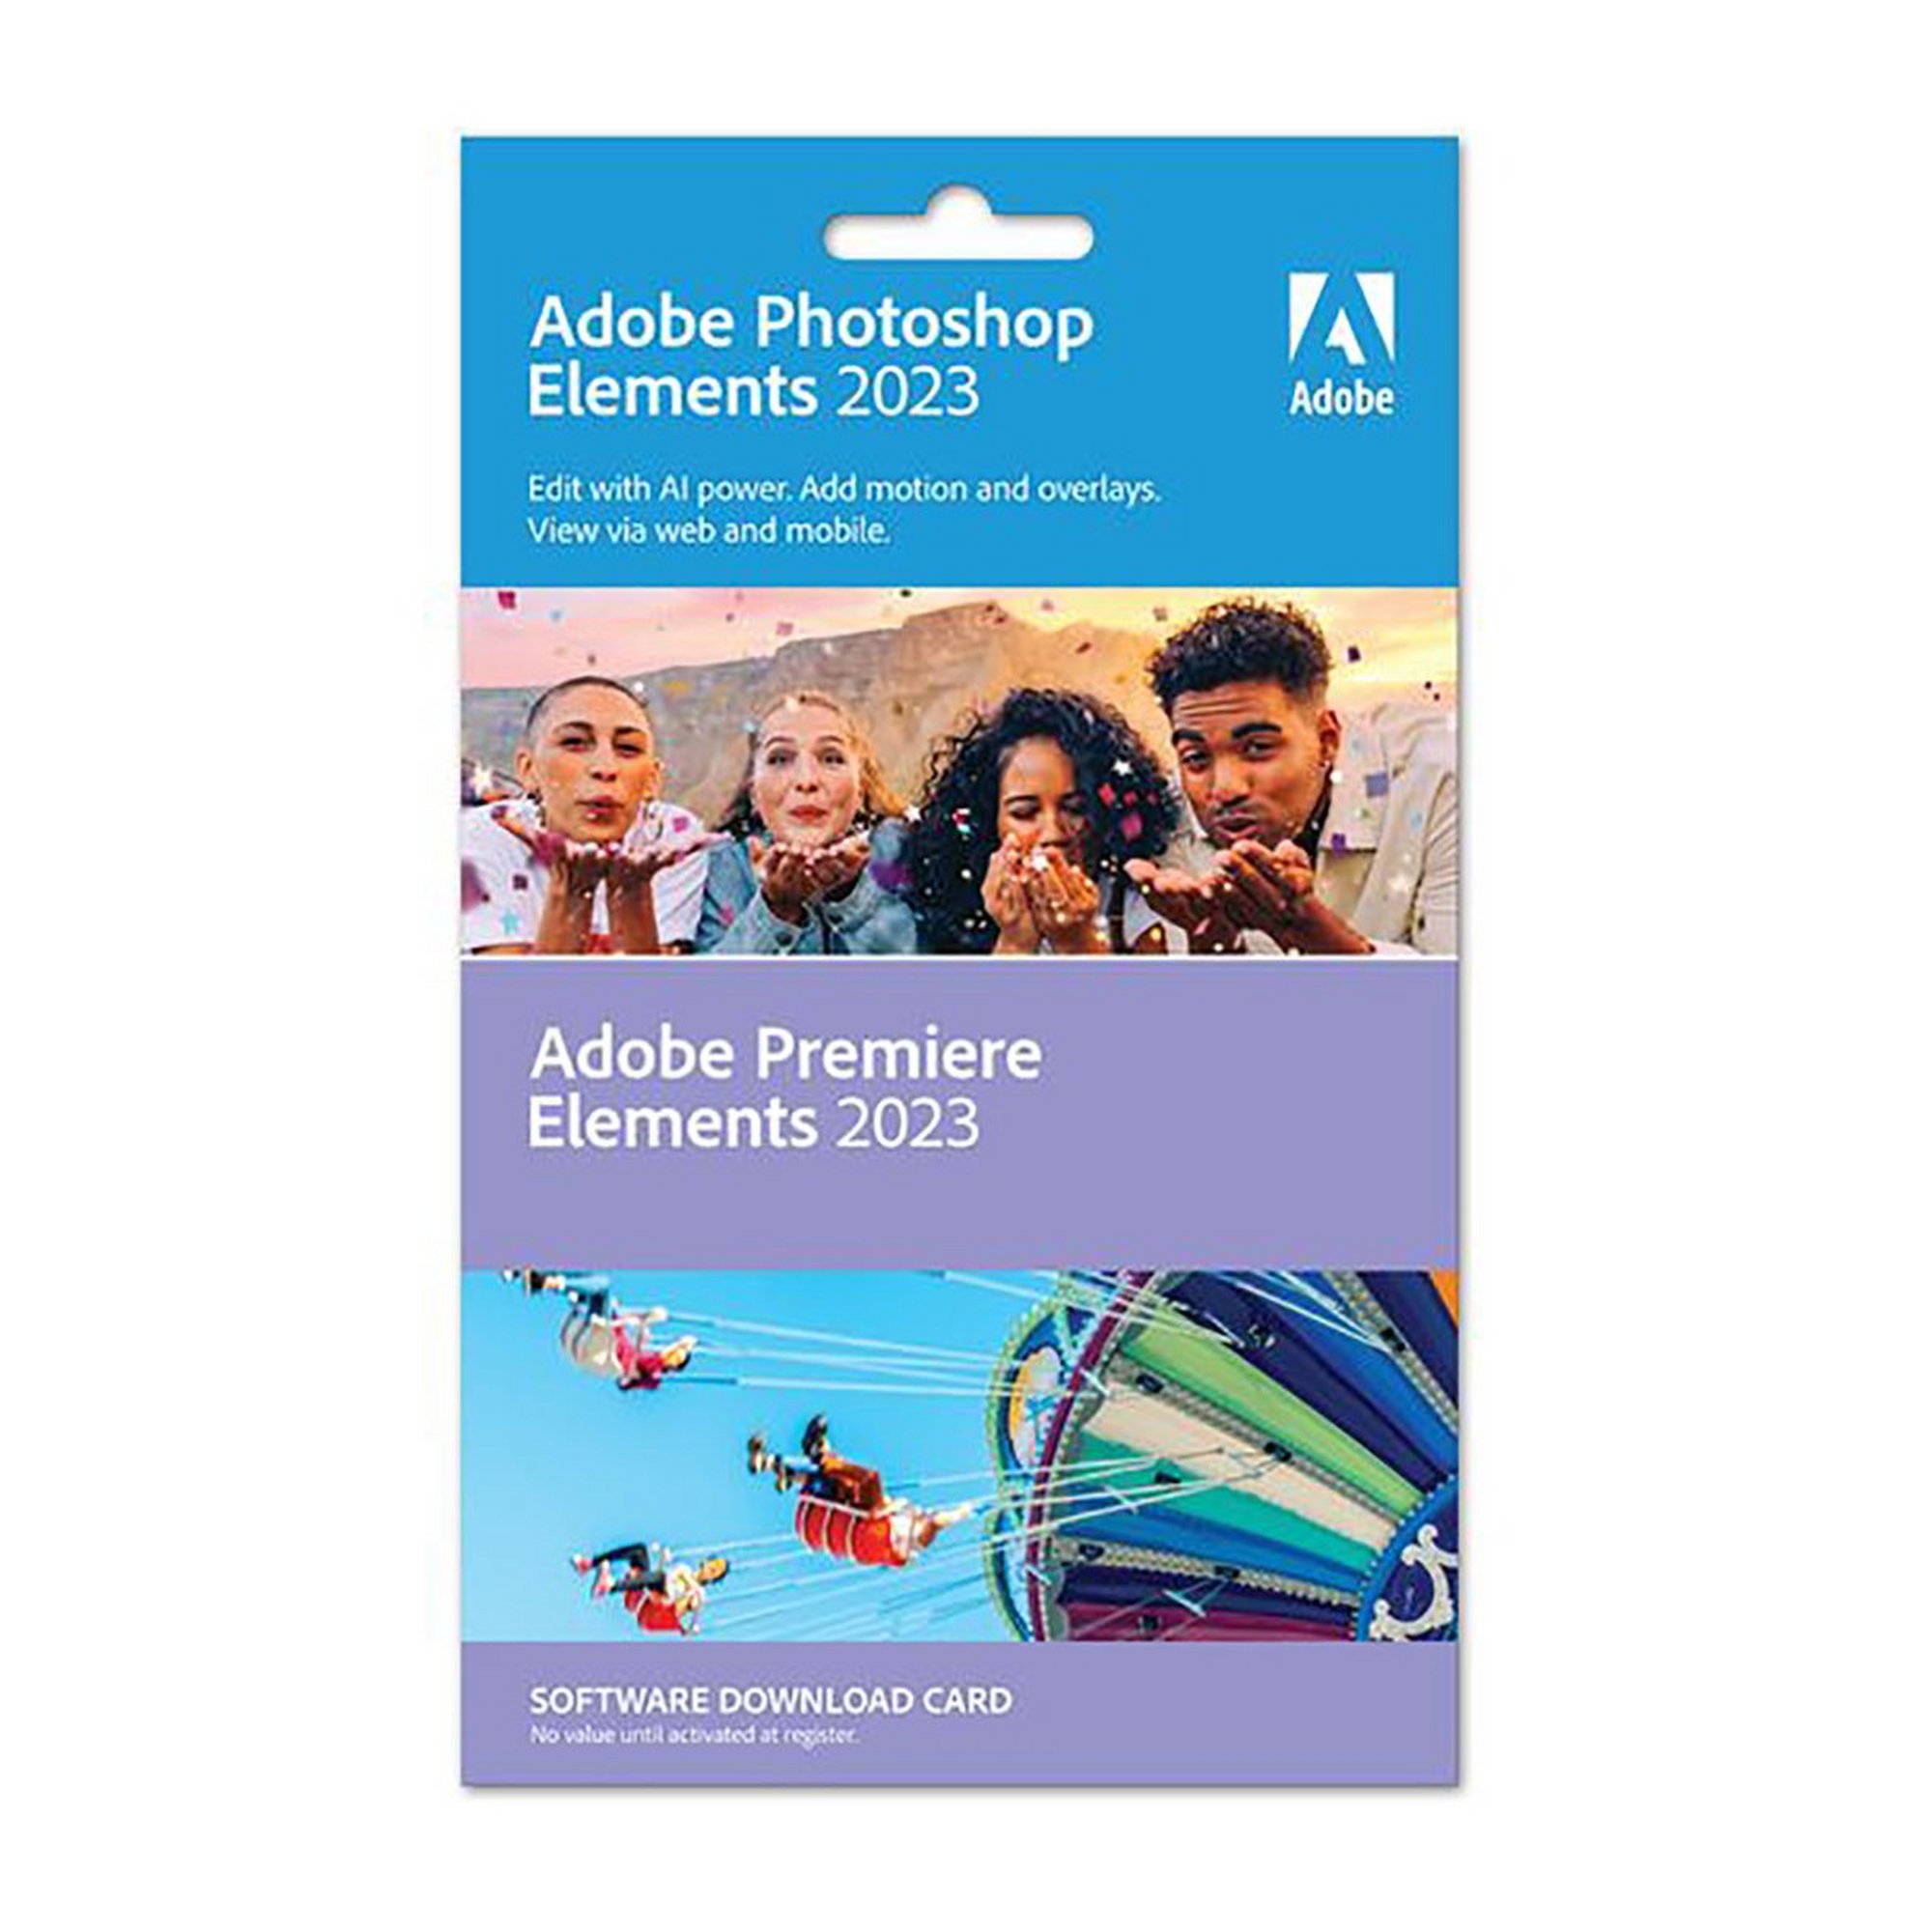 Adobe ADOBE Photoshop Elements 2023 and Premiere